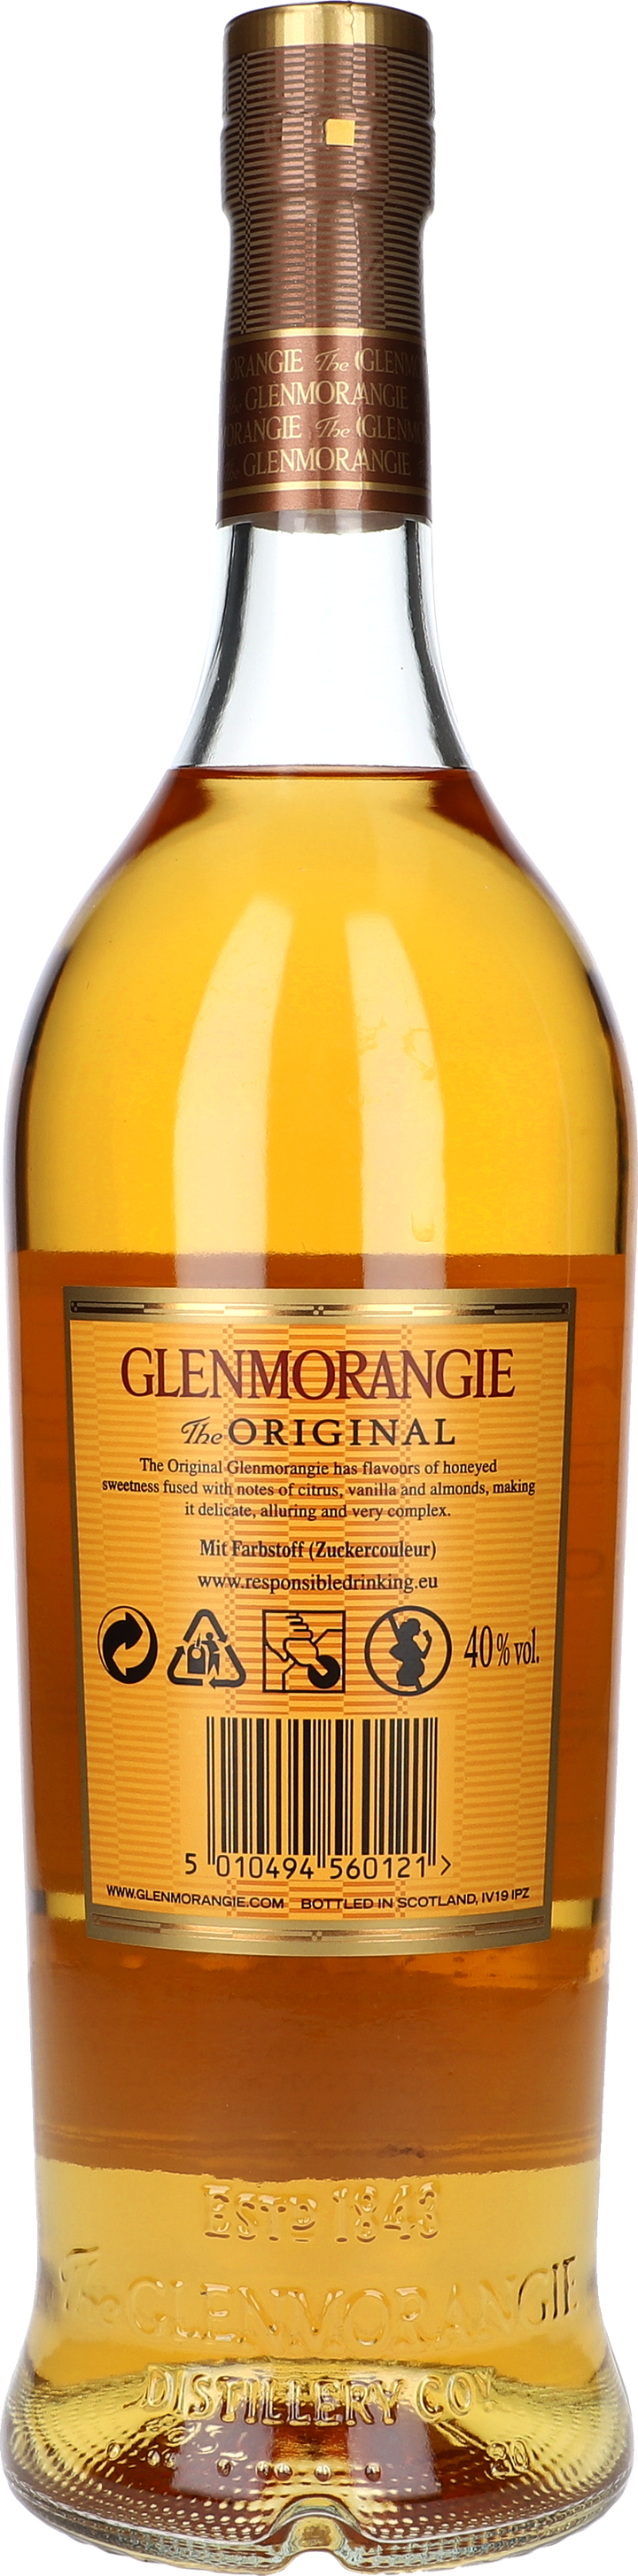 Glenmorangie Original 10y 40% 0,7 ltr.